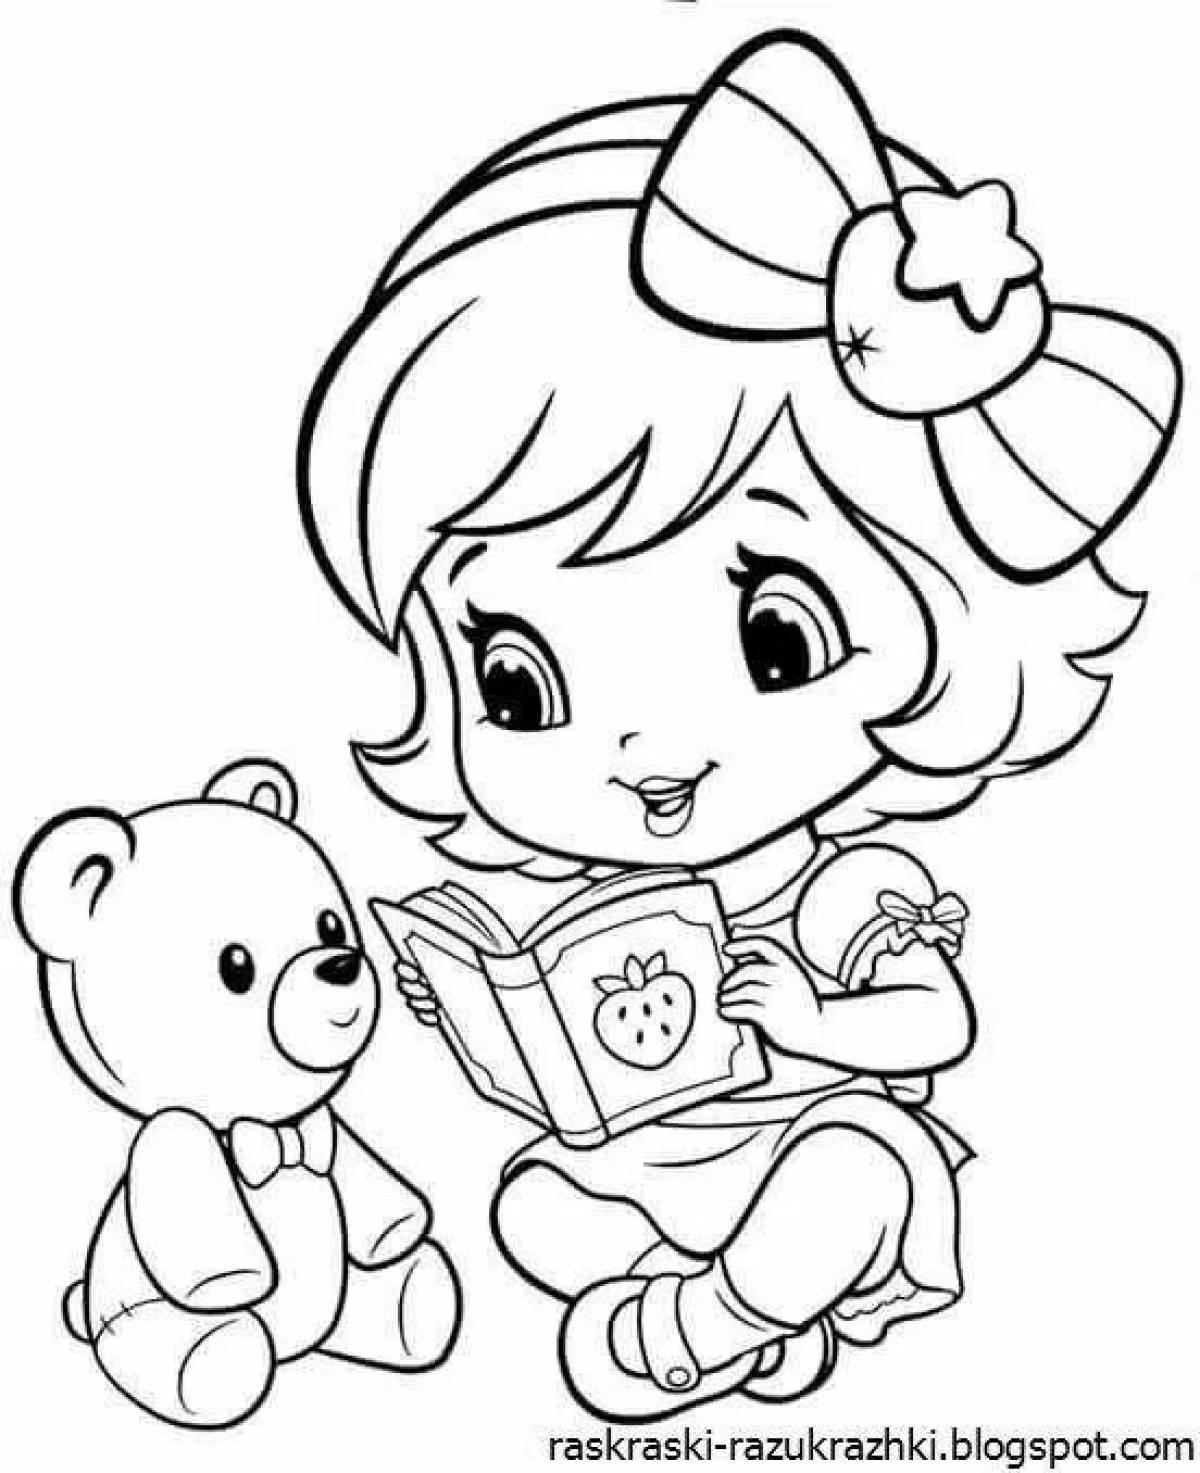 Cute baby coloring book